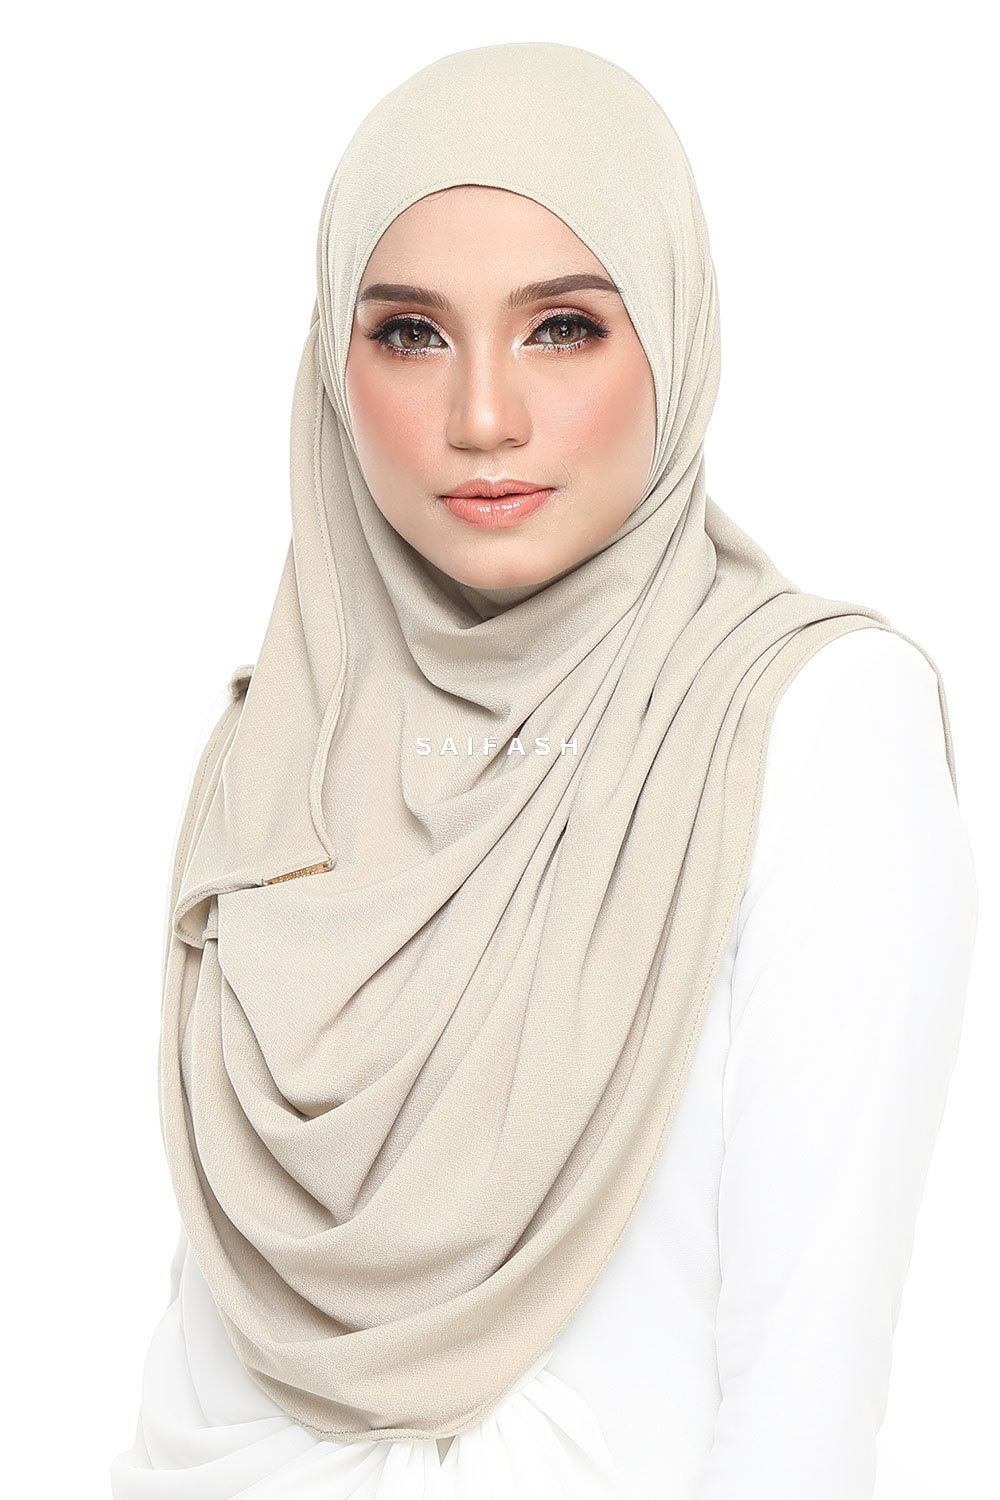 Aralyn Moss Instant Hijab in Khakis